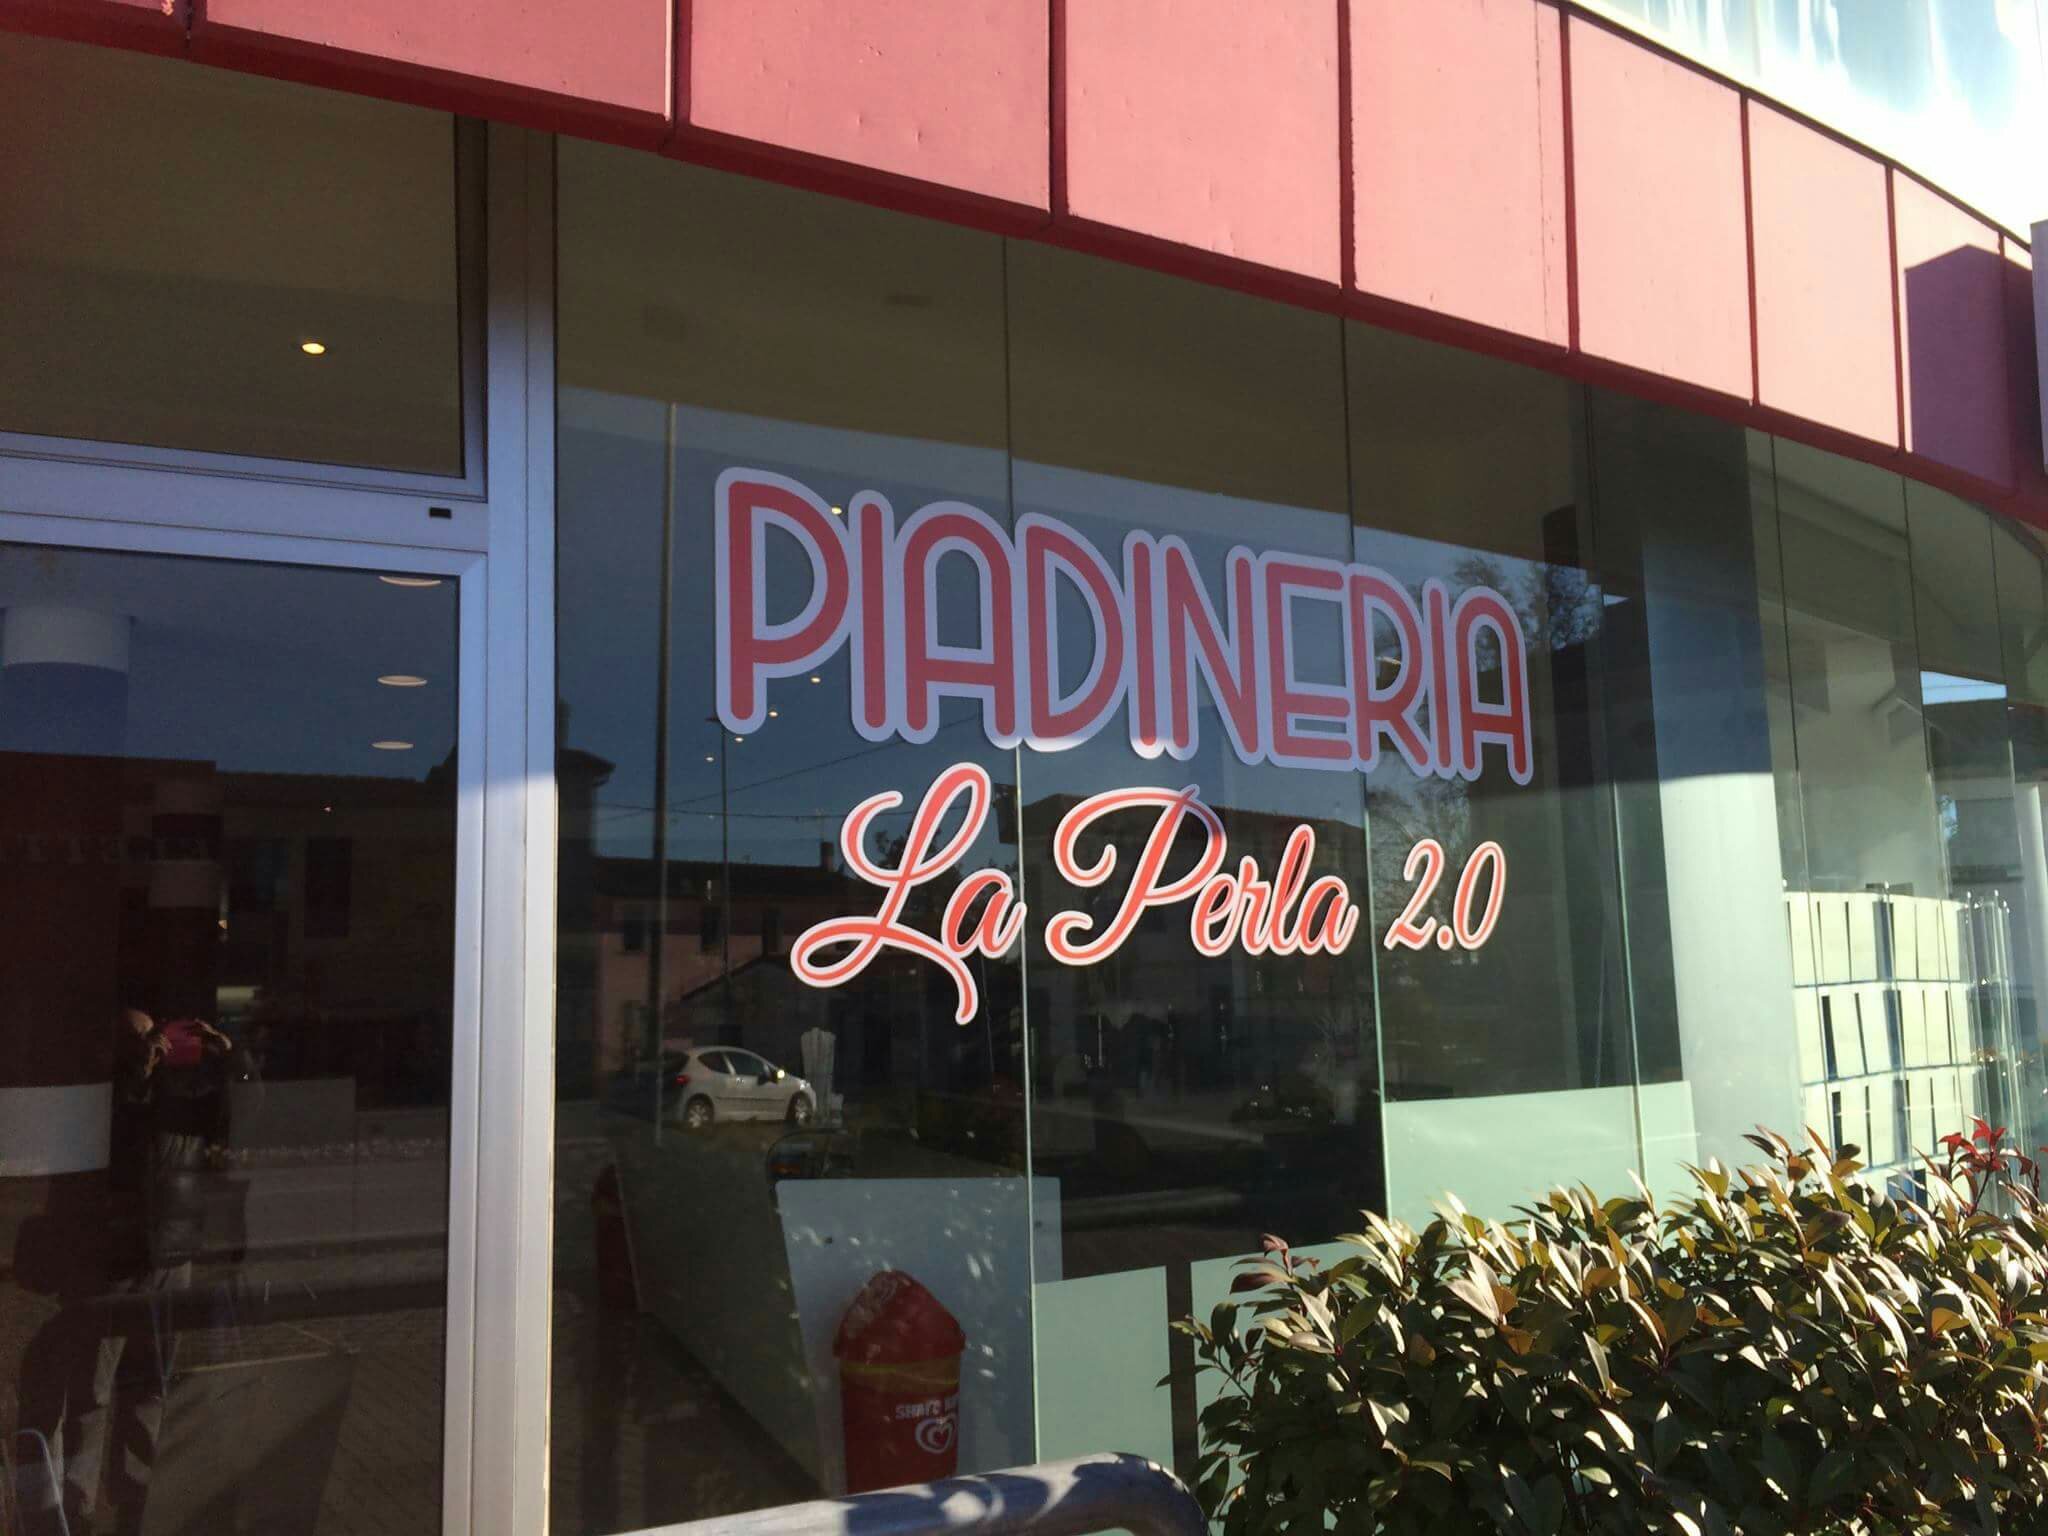 Piadineria La Perla 2.0, Rovigo